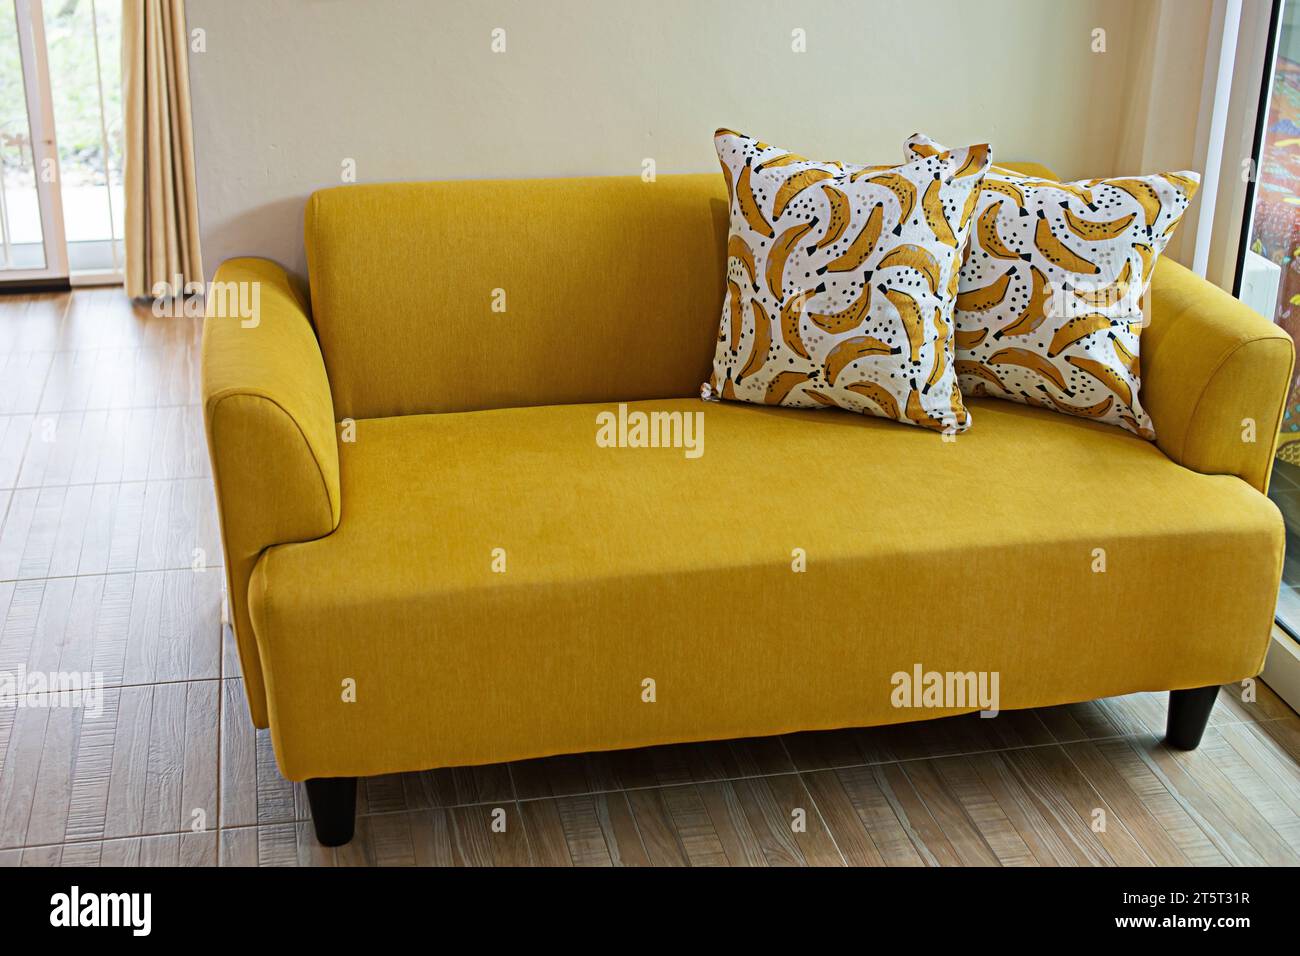 Living room decoration idea with yellow sofa and wood grain floor Stock Photo